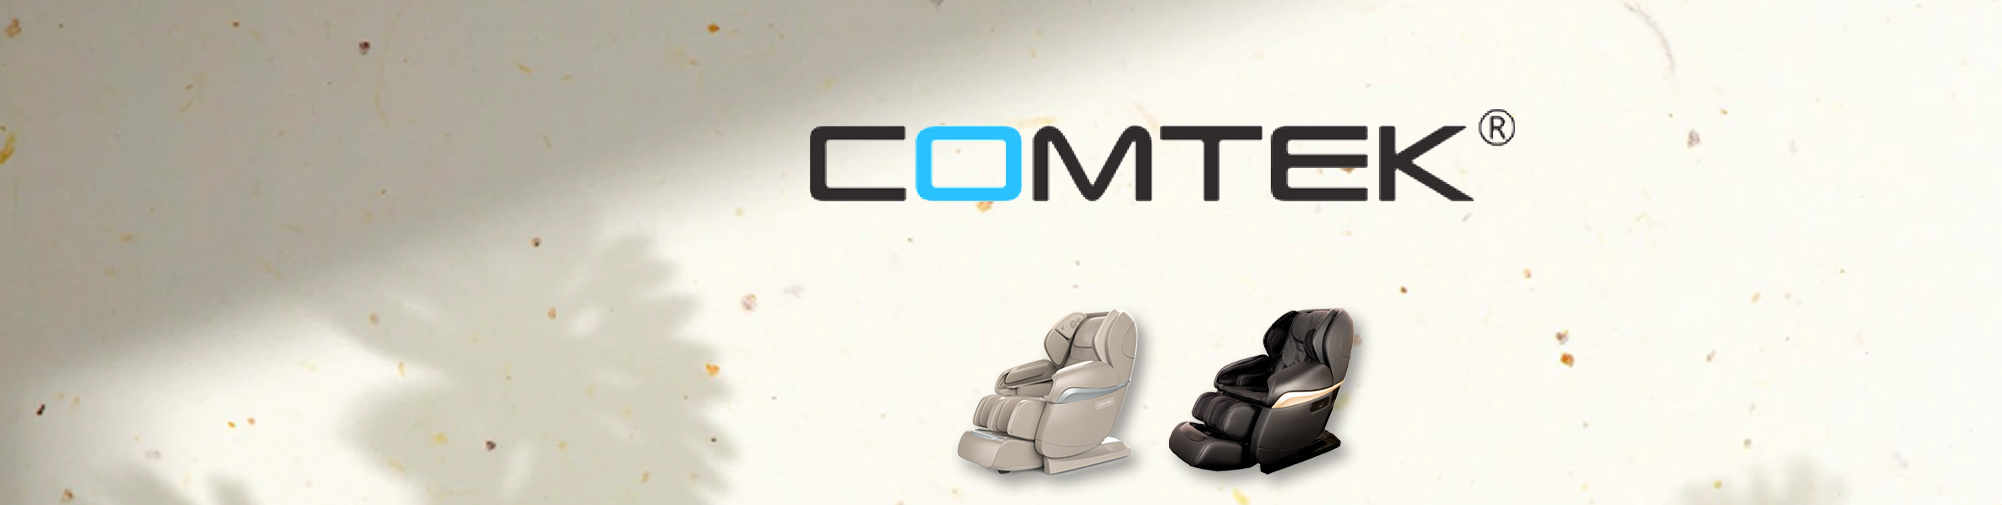 COMTEK - professionele originele producent | Massage Chair World